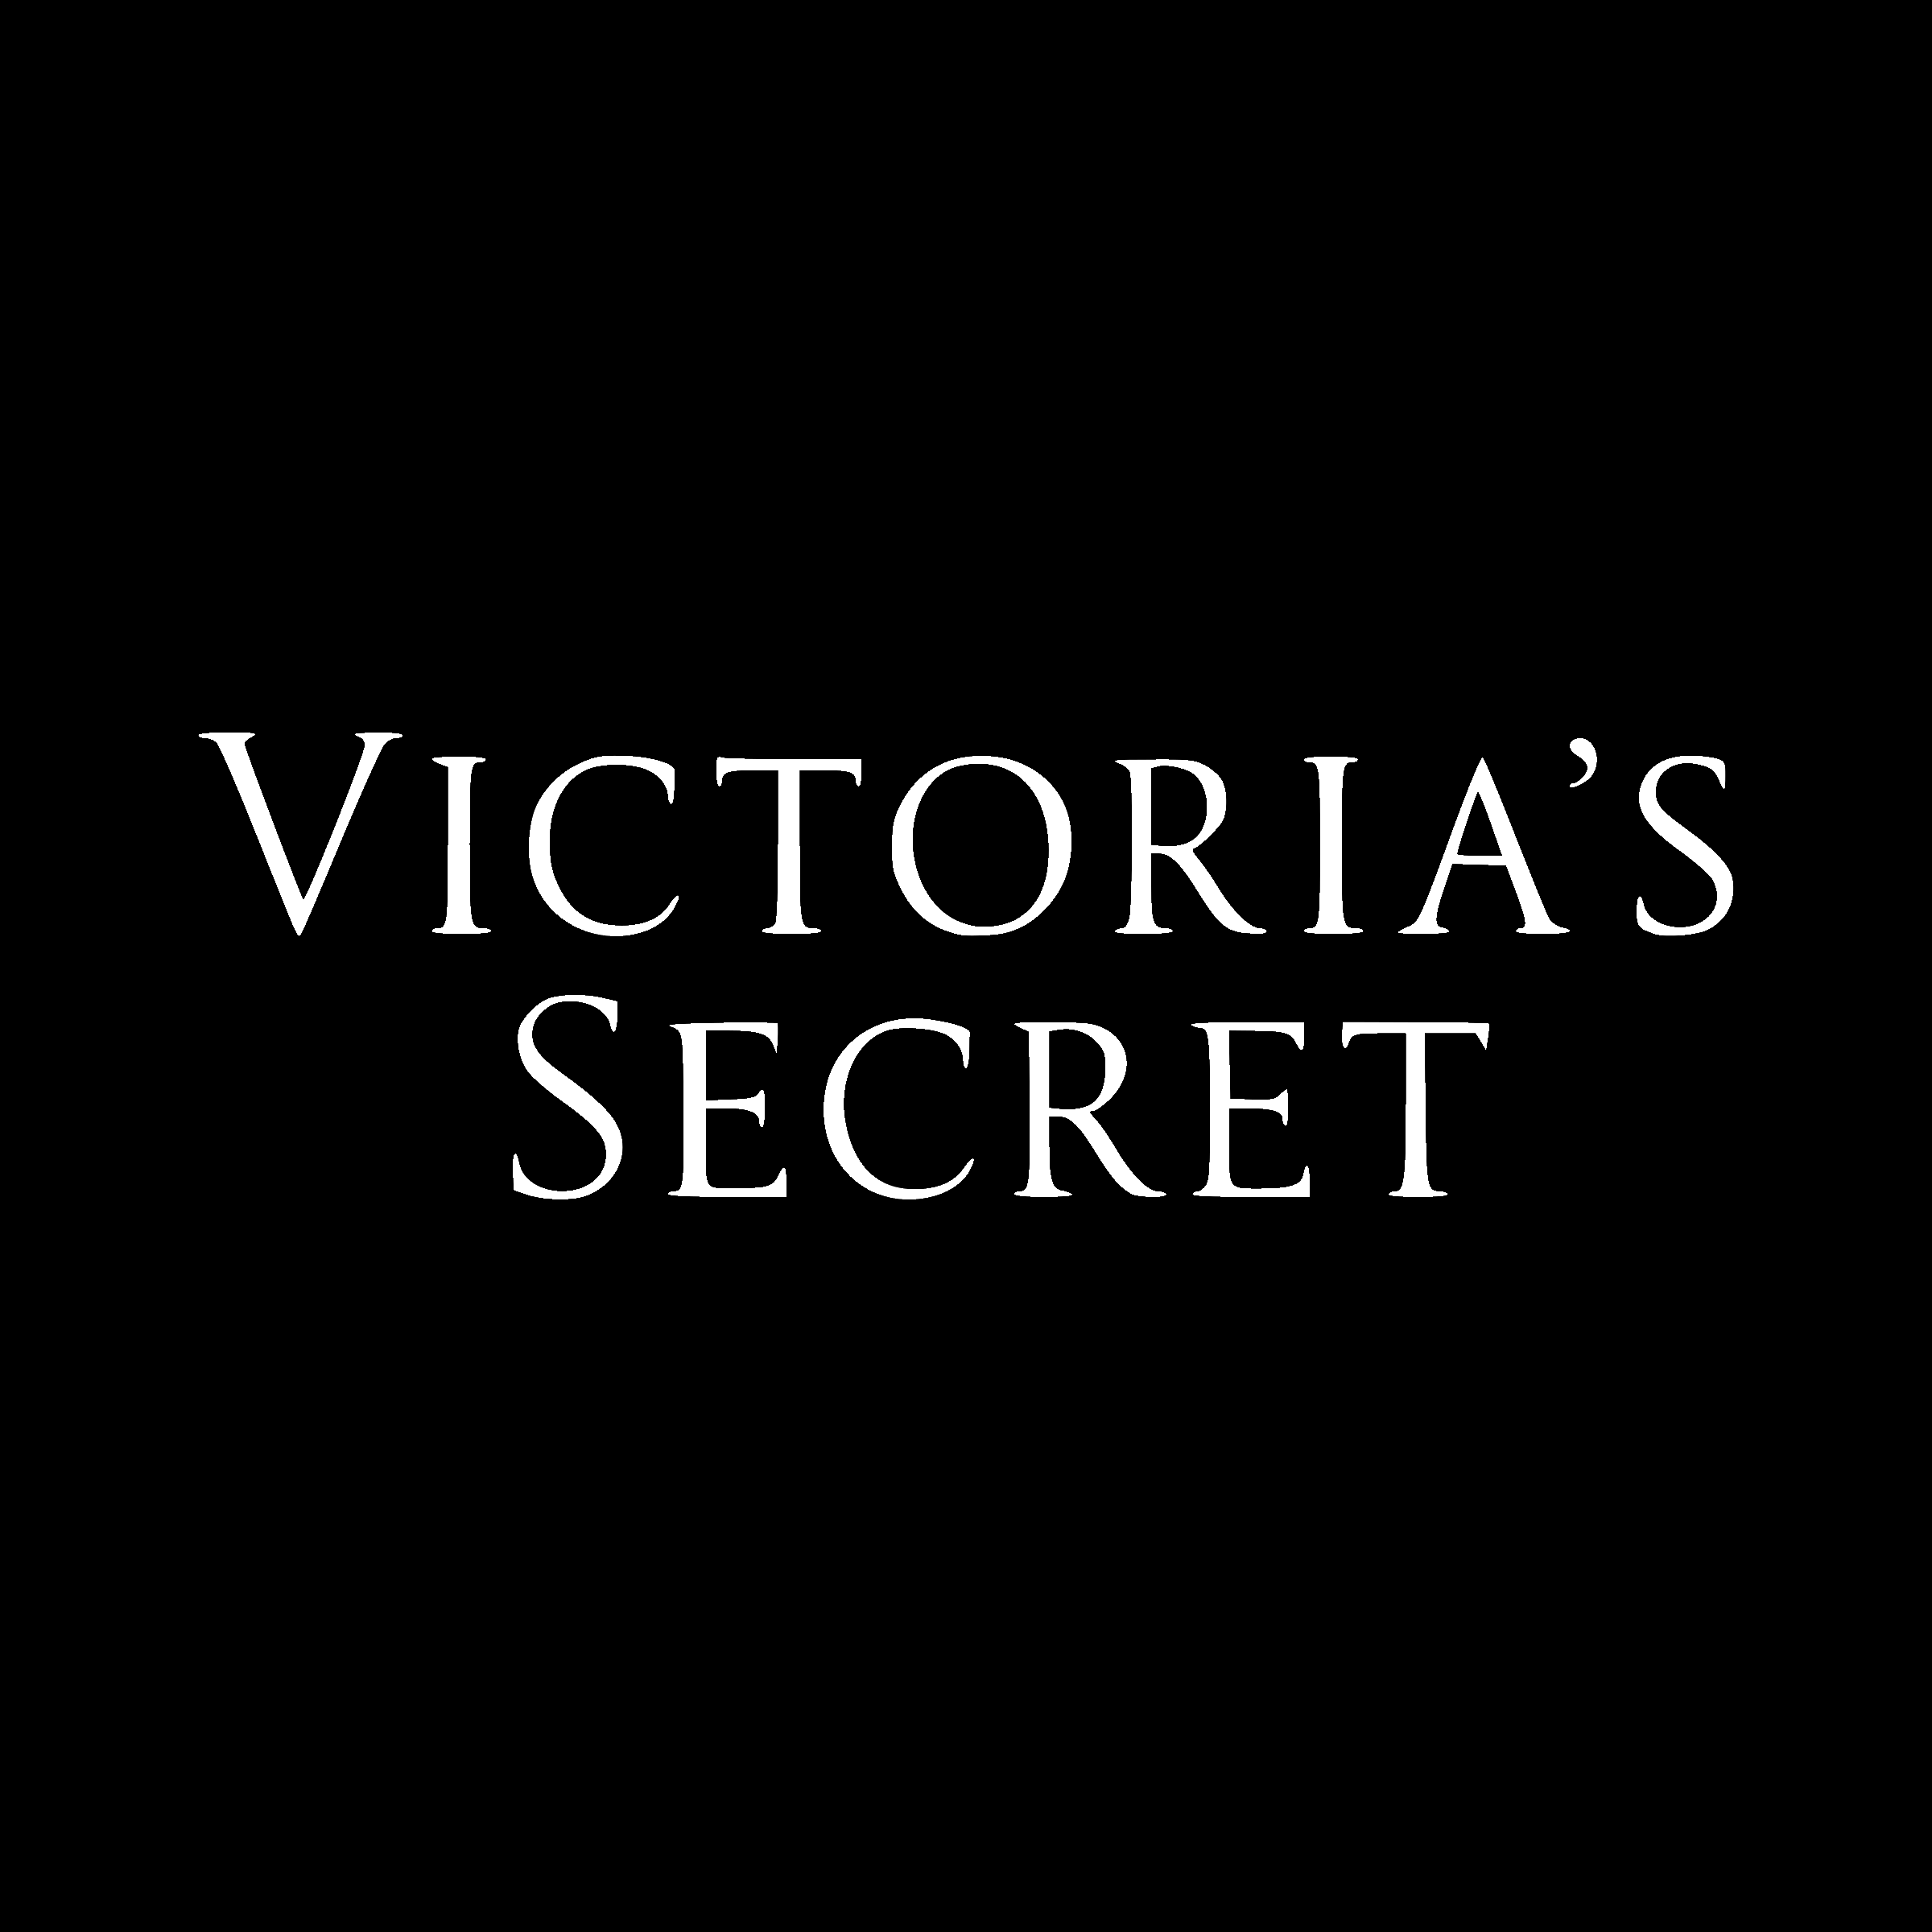 victorias-secret-logo-black-and-white.png